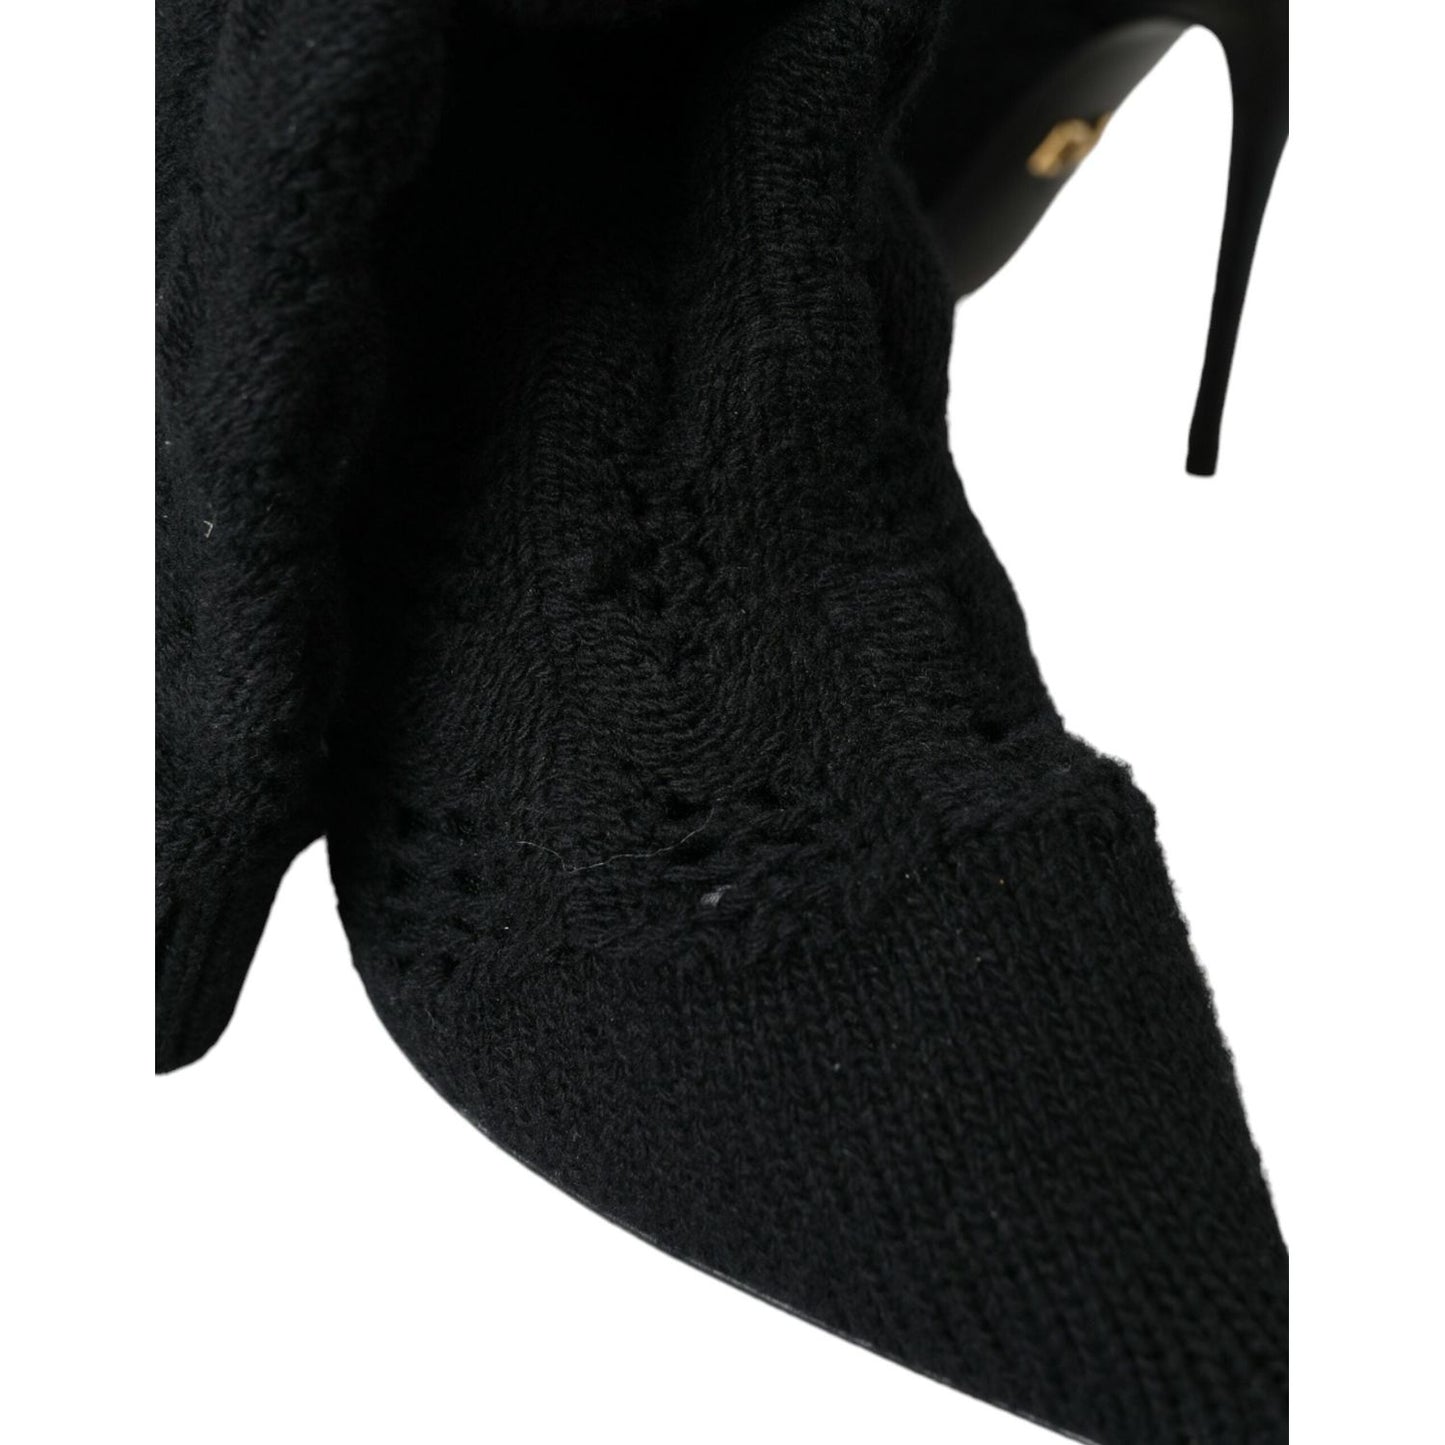 Dolce & Gabbana Black Stiletto Heels Mid Calf Boots Shoes black-stiletto-heels-mid-calf-boots-shoes